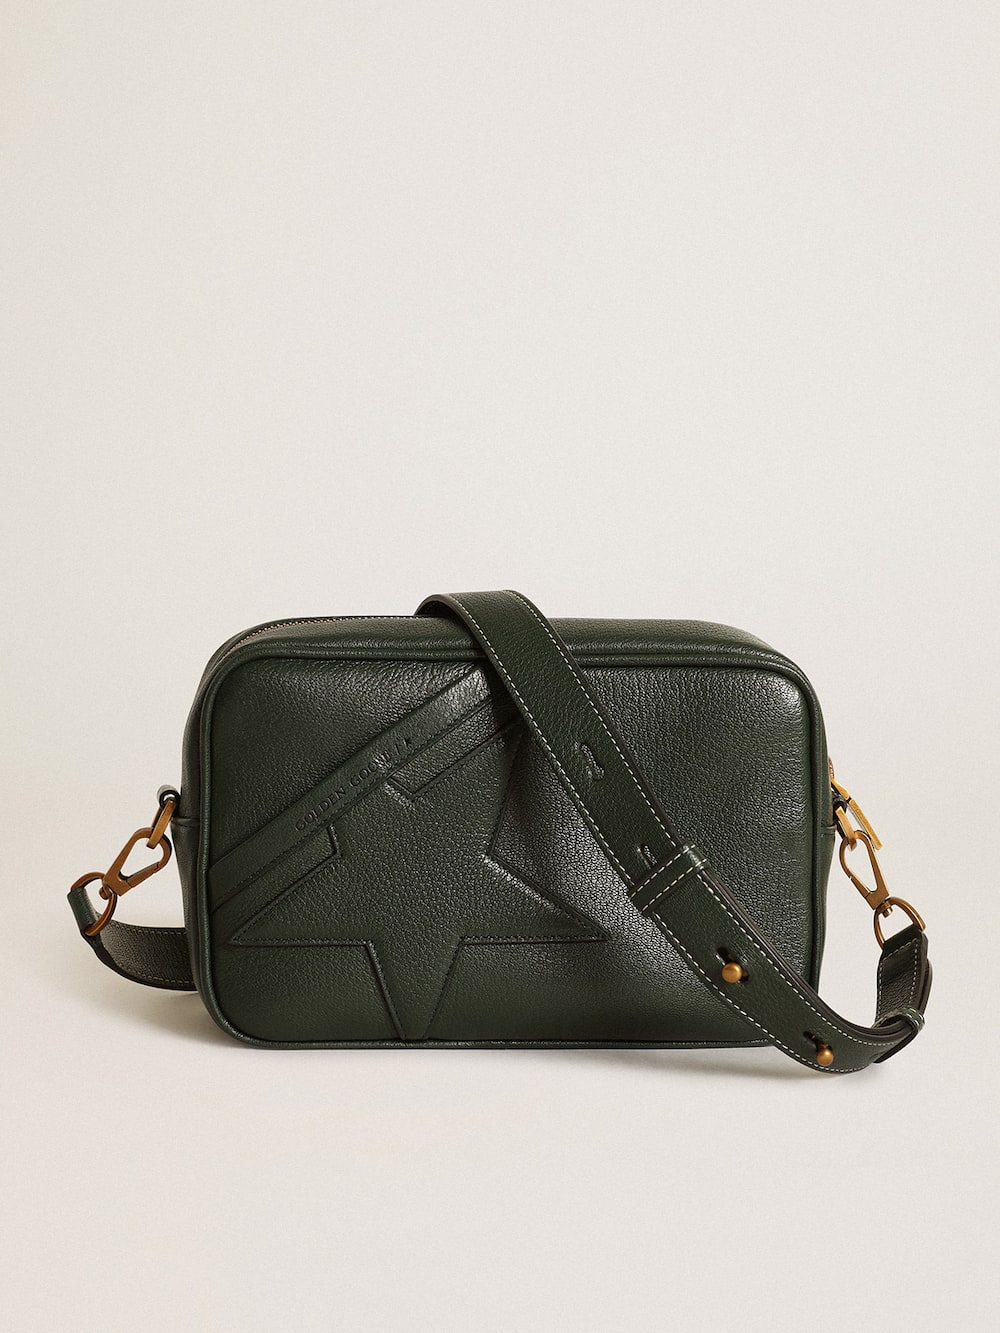 Golden Goose - Star Bag in pelle verde scuro con stella ton sur ton in 